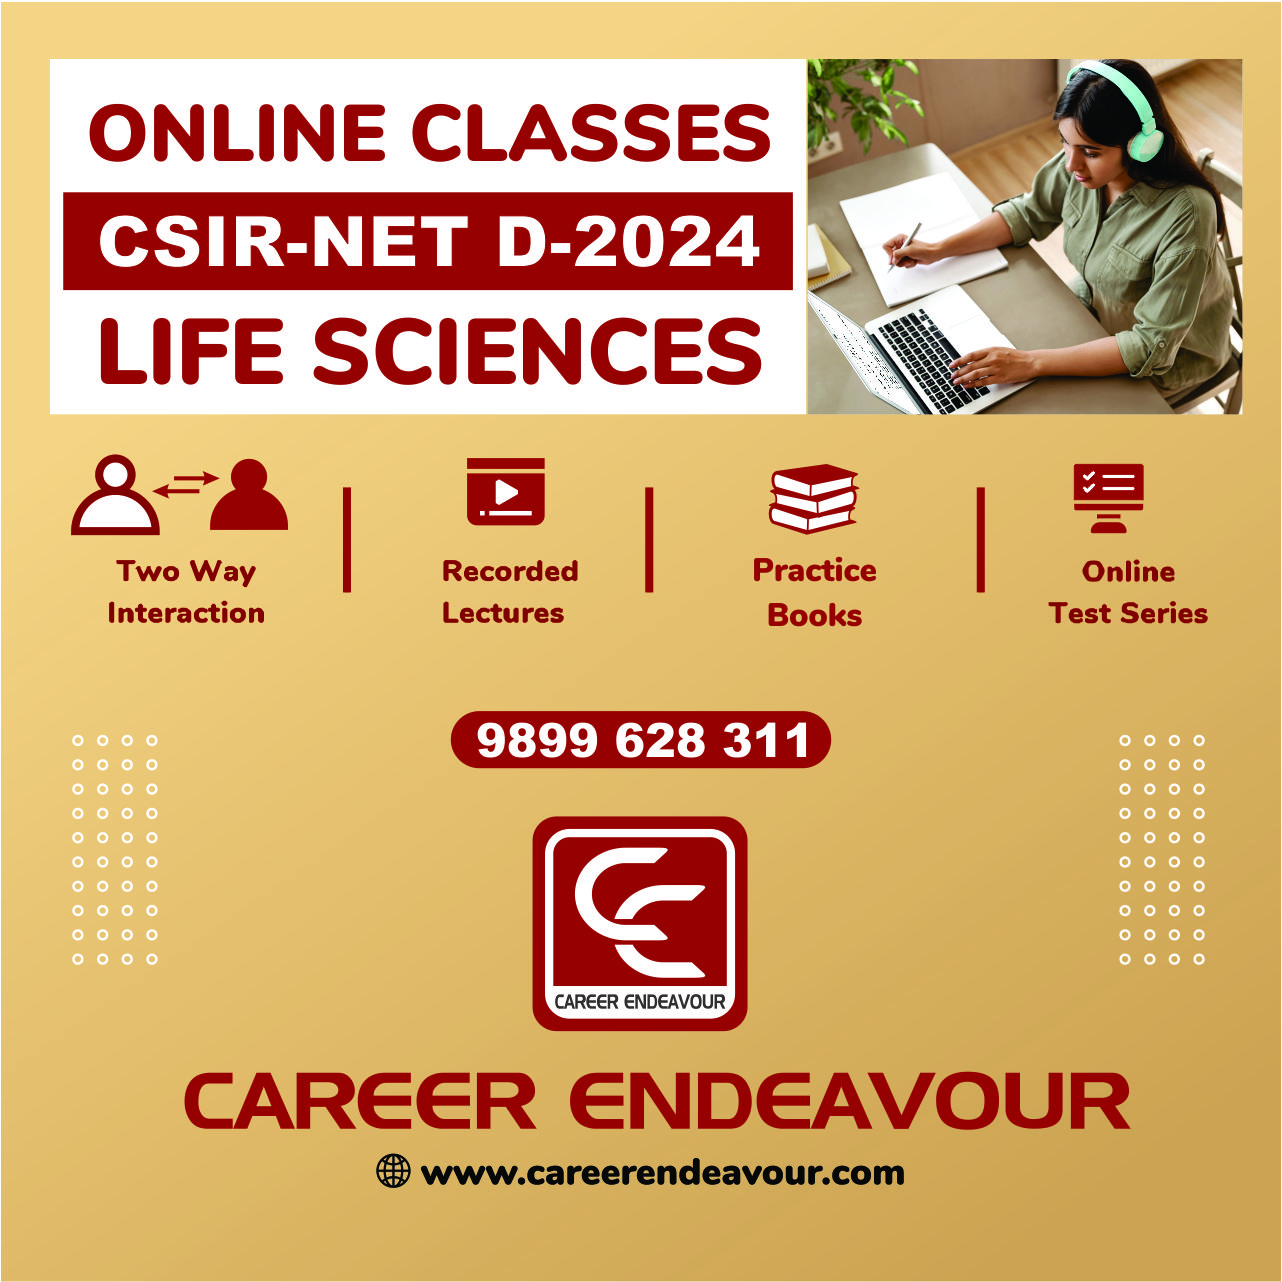 csir net life science online coaching